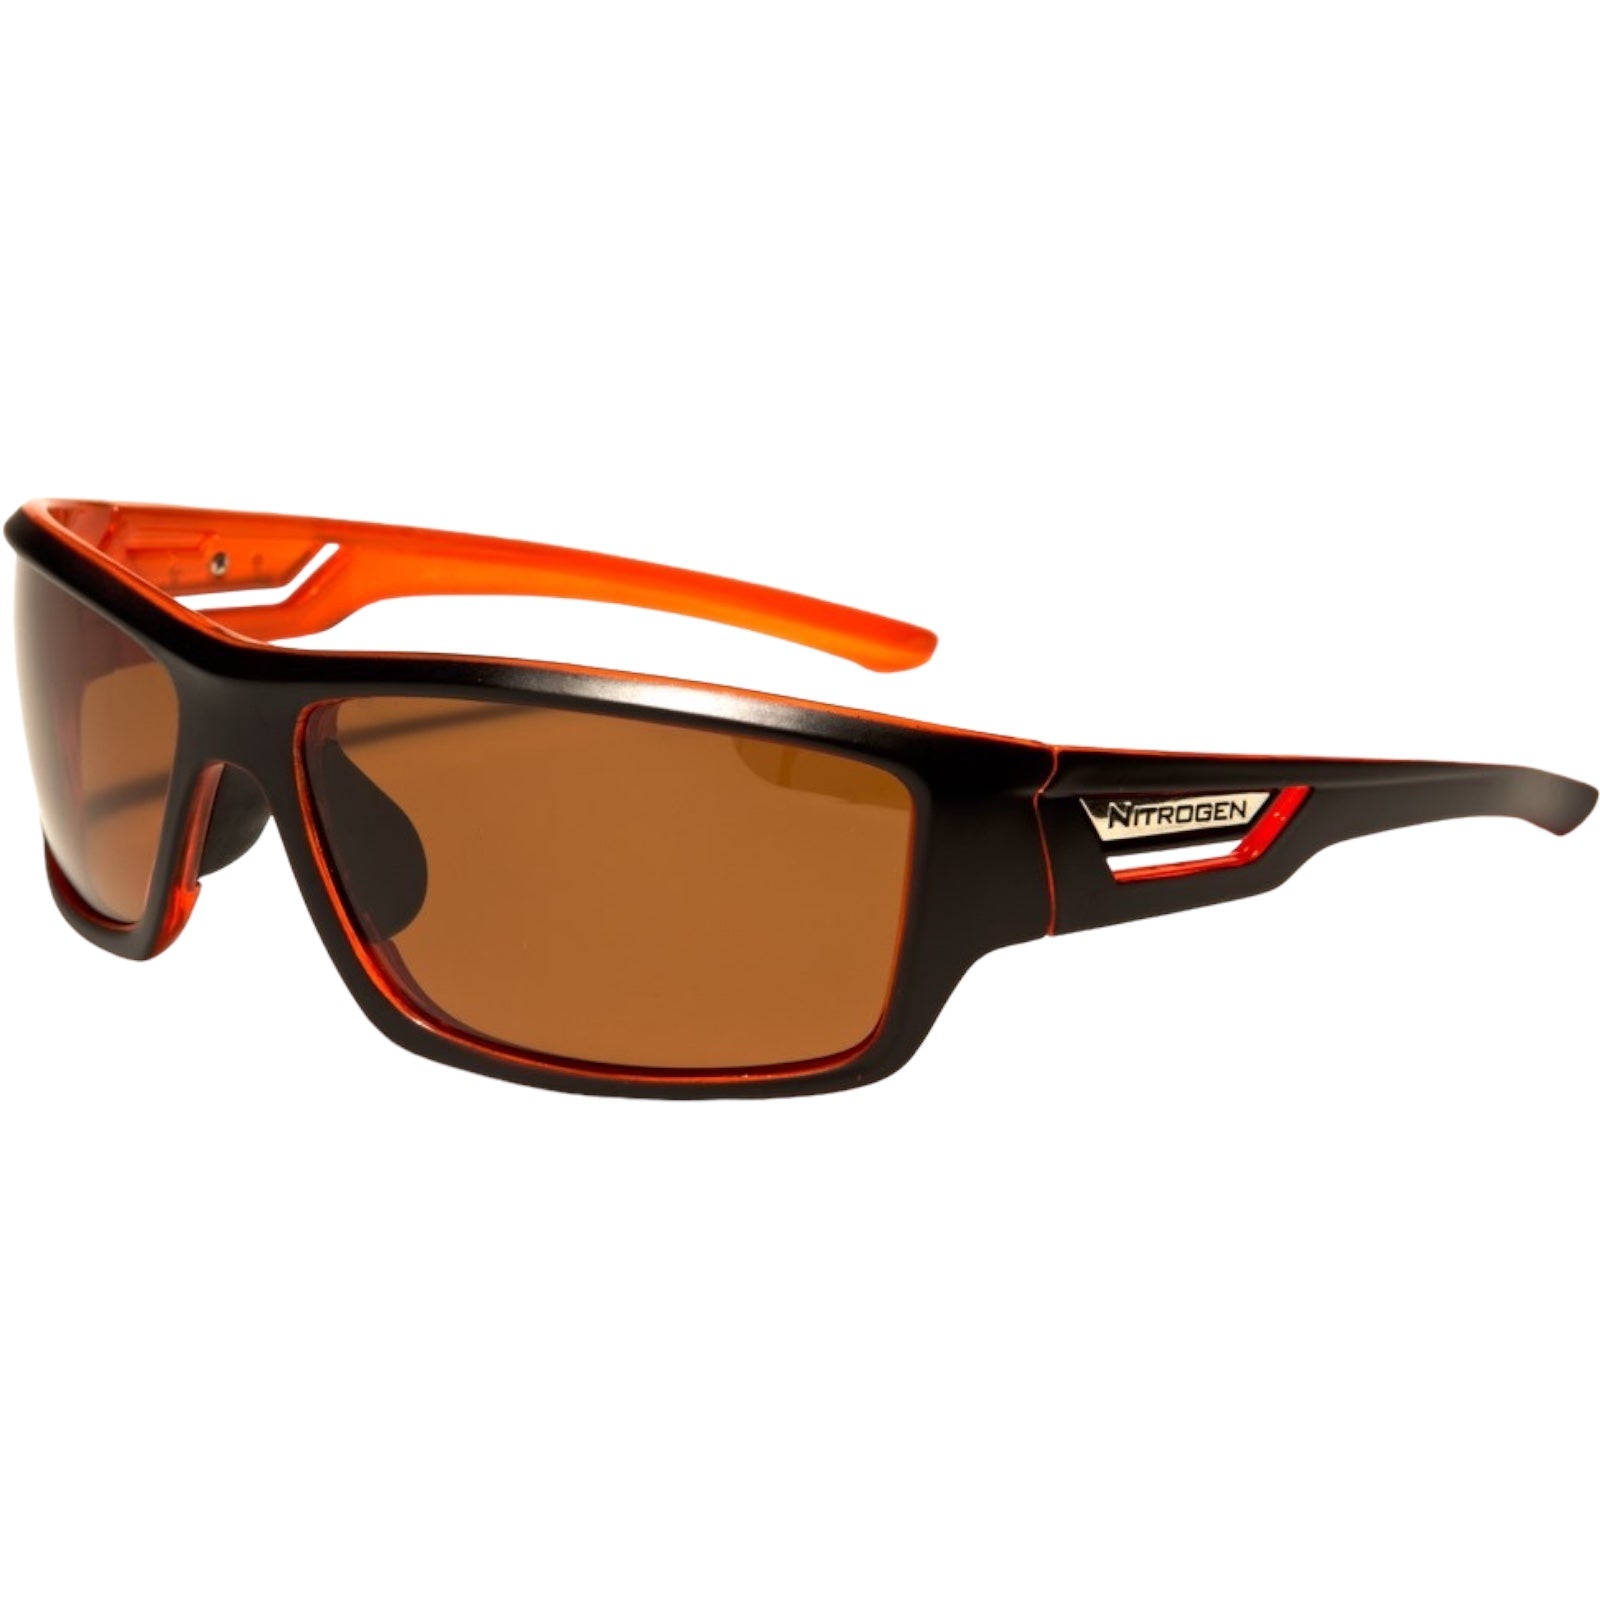 Nitrogen Polarised Large Sports Fishing Sunglasses Great for Driving